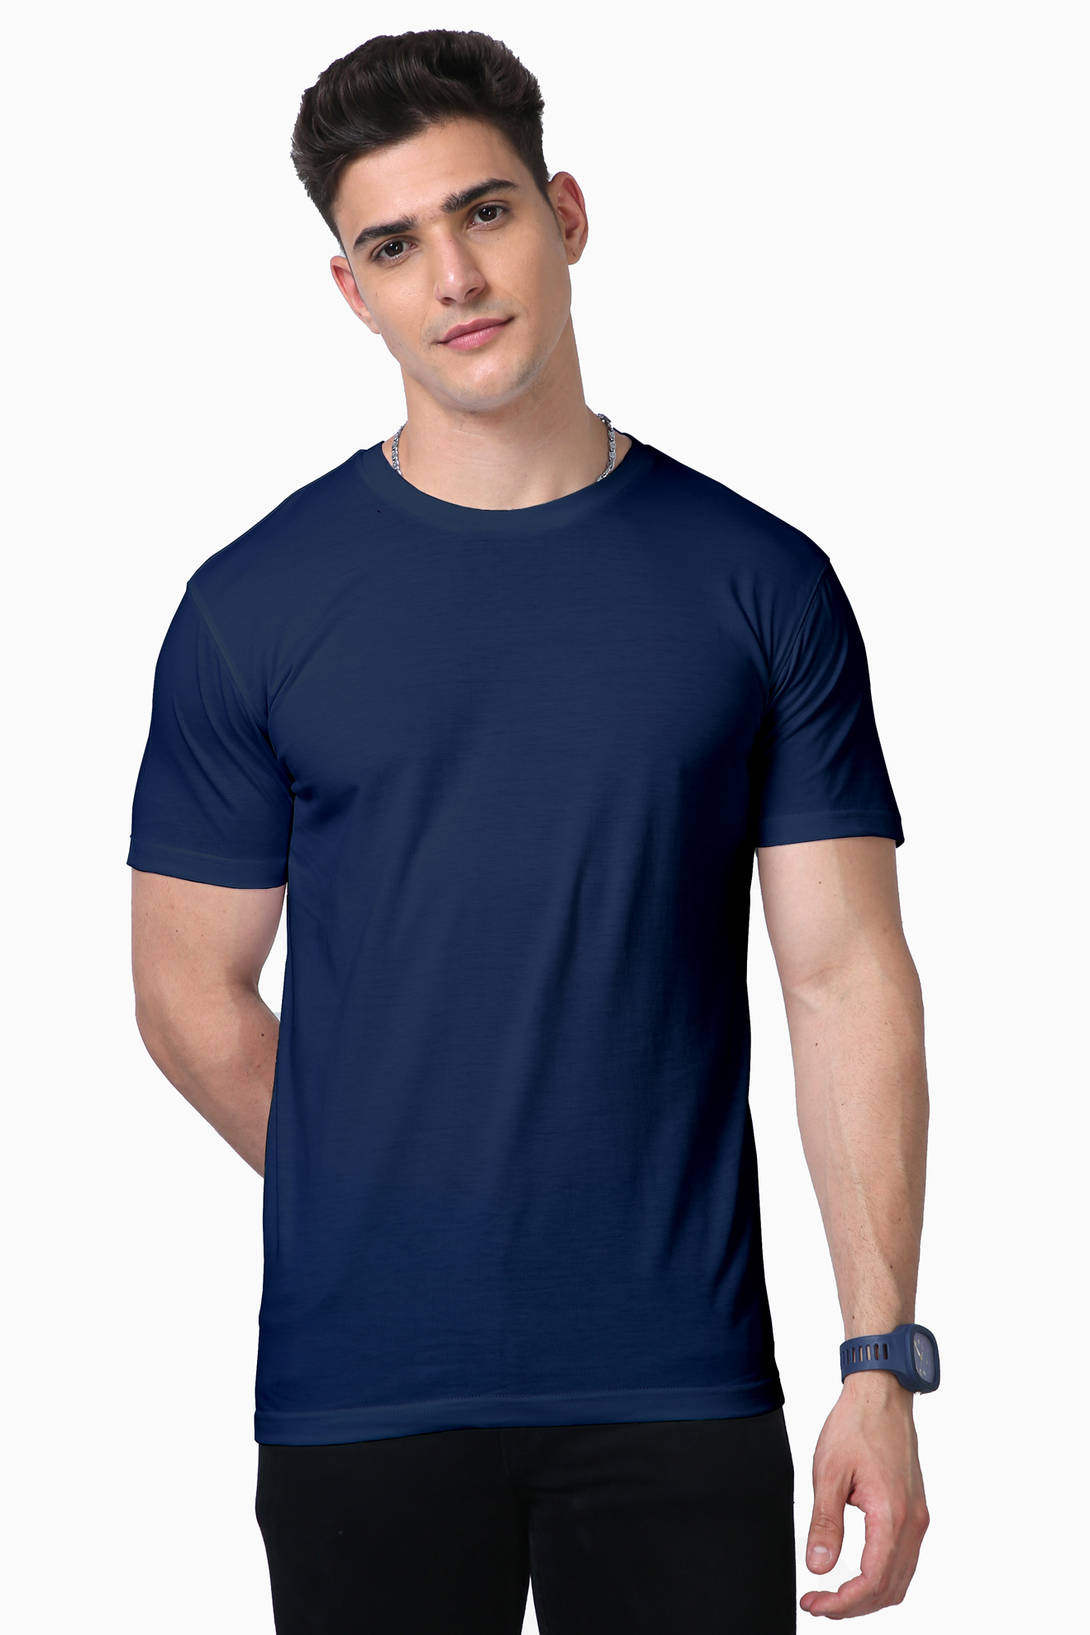 Plain Supima T-Shirts For Men - WowWaves - 2